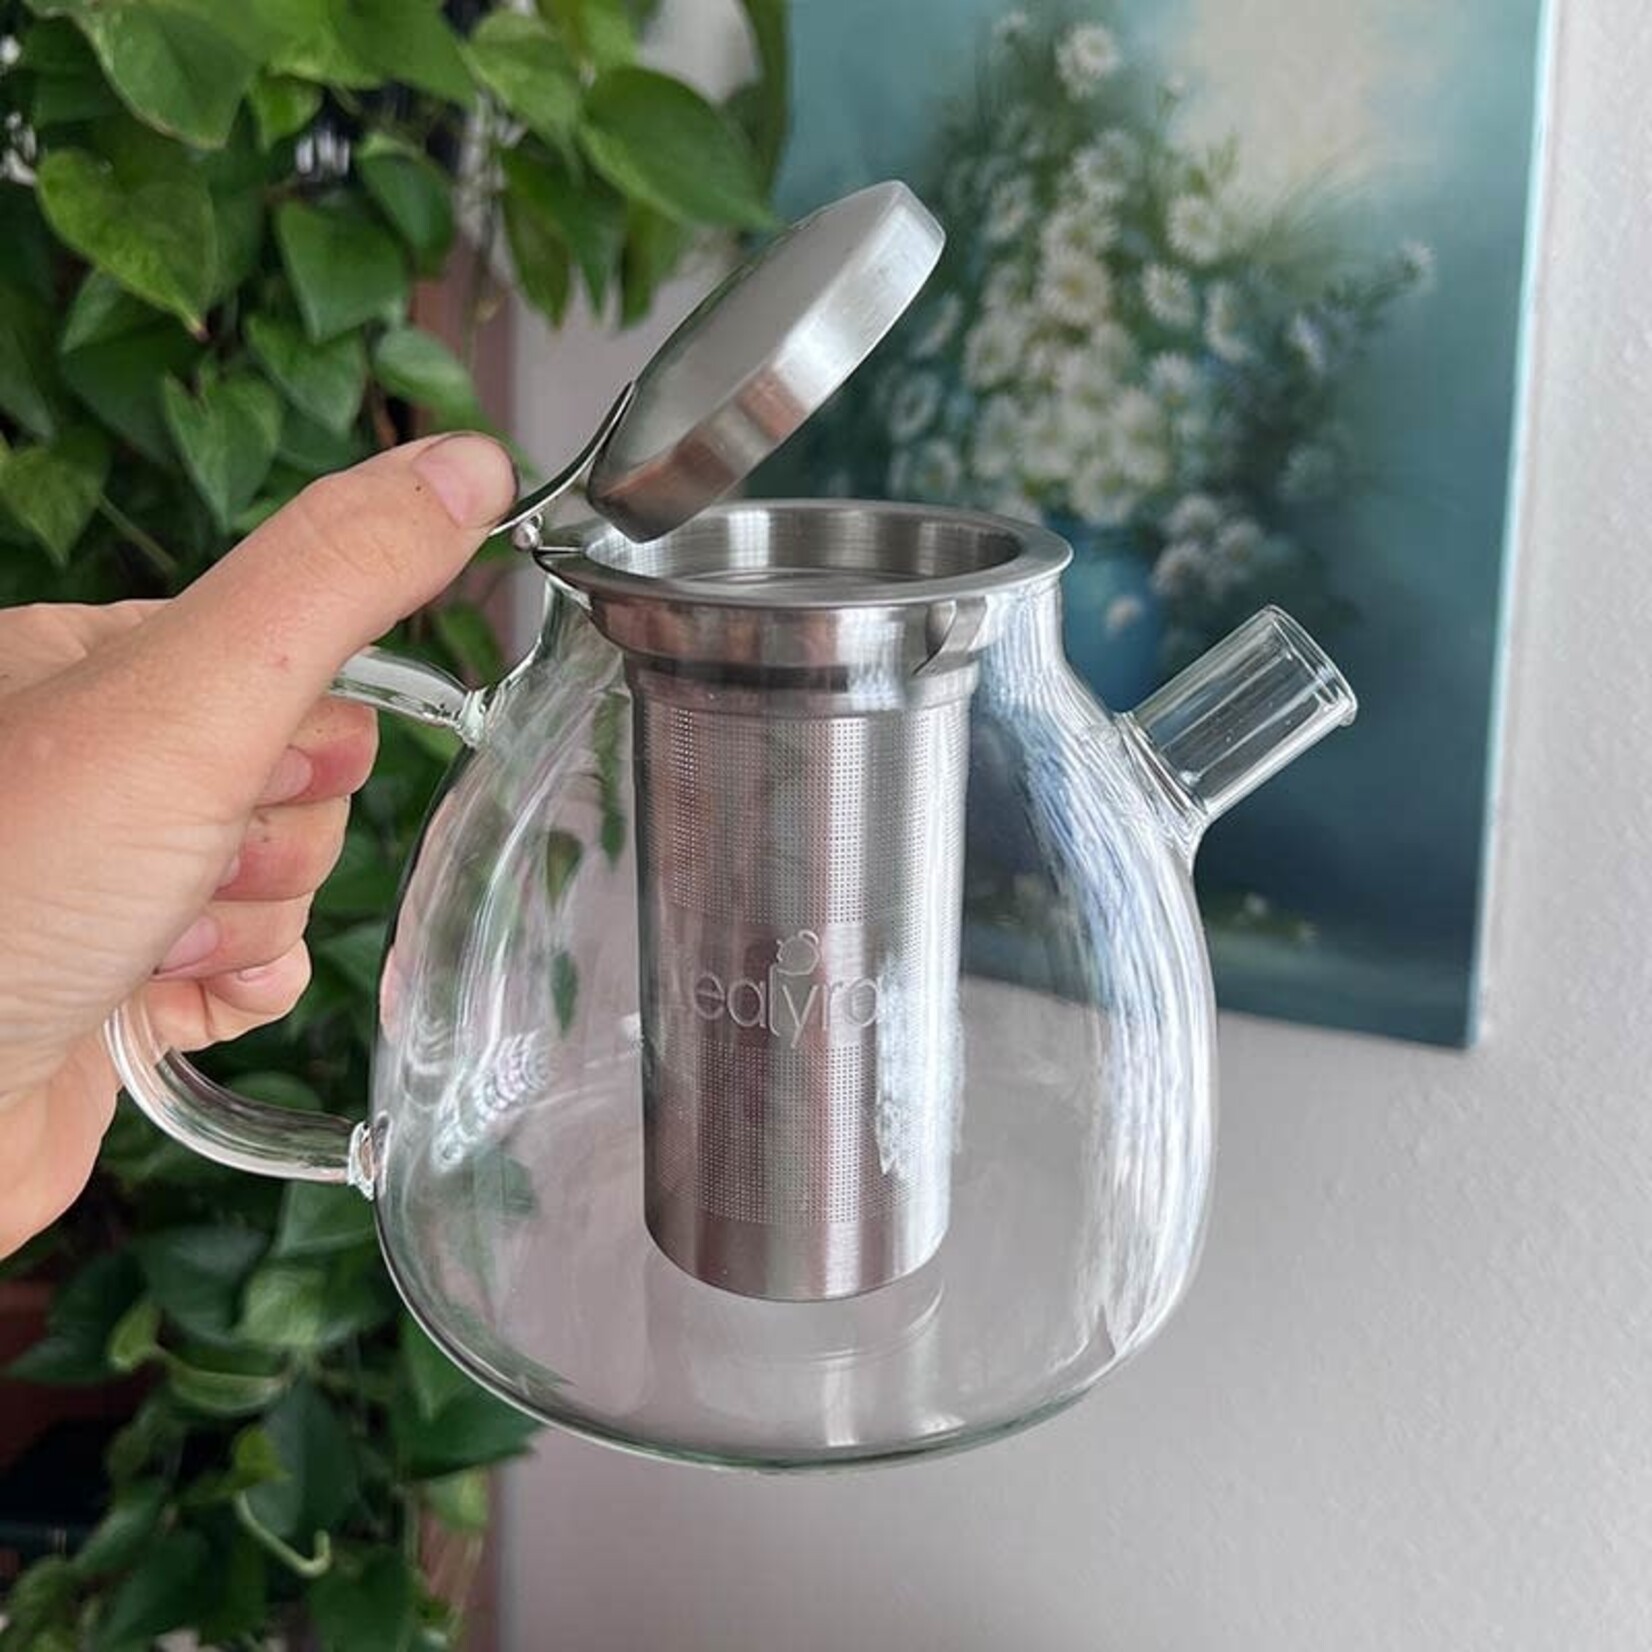 Tealyra Lyra Regular Glass Teapot Kettle with infuser 37oz- Stove-Top Safe - by TeaLyra